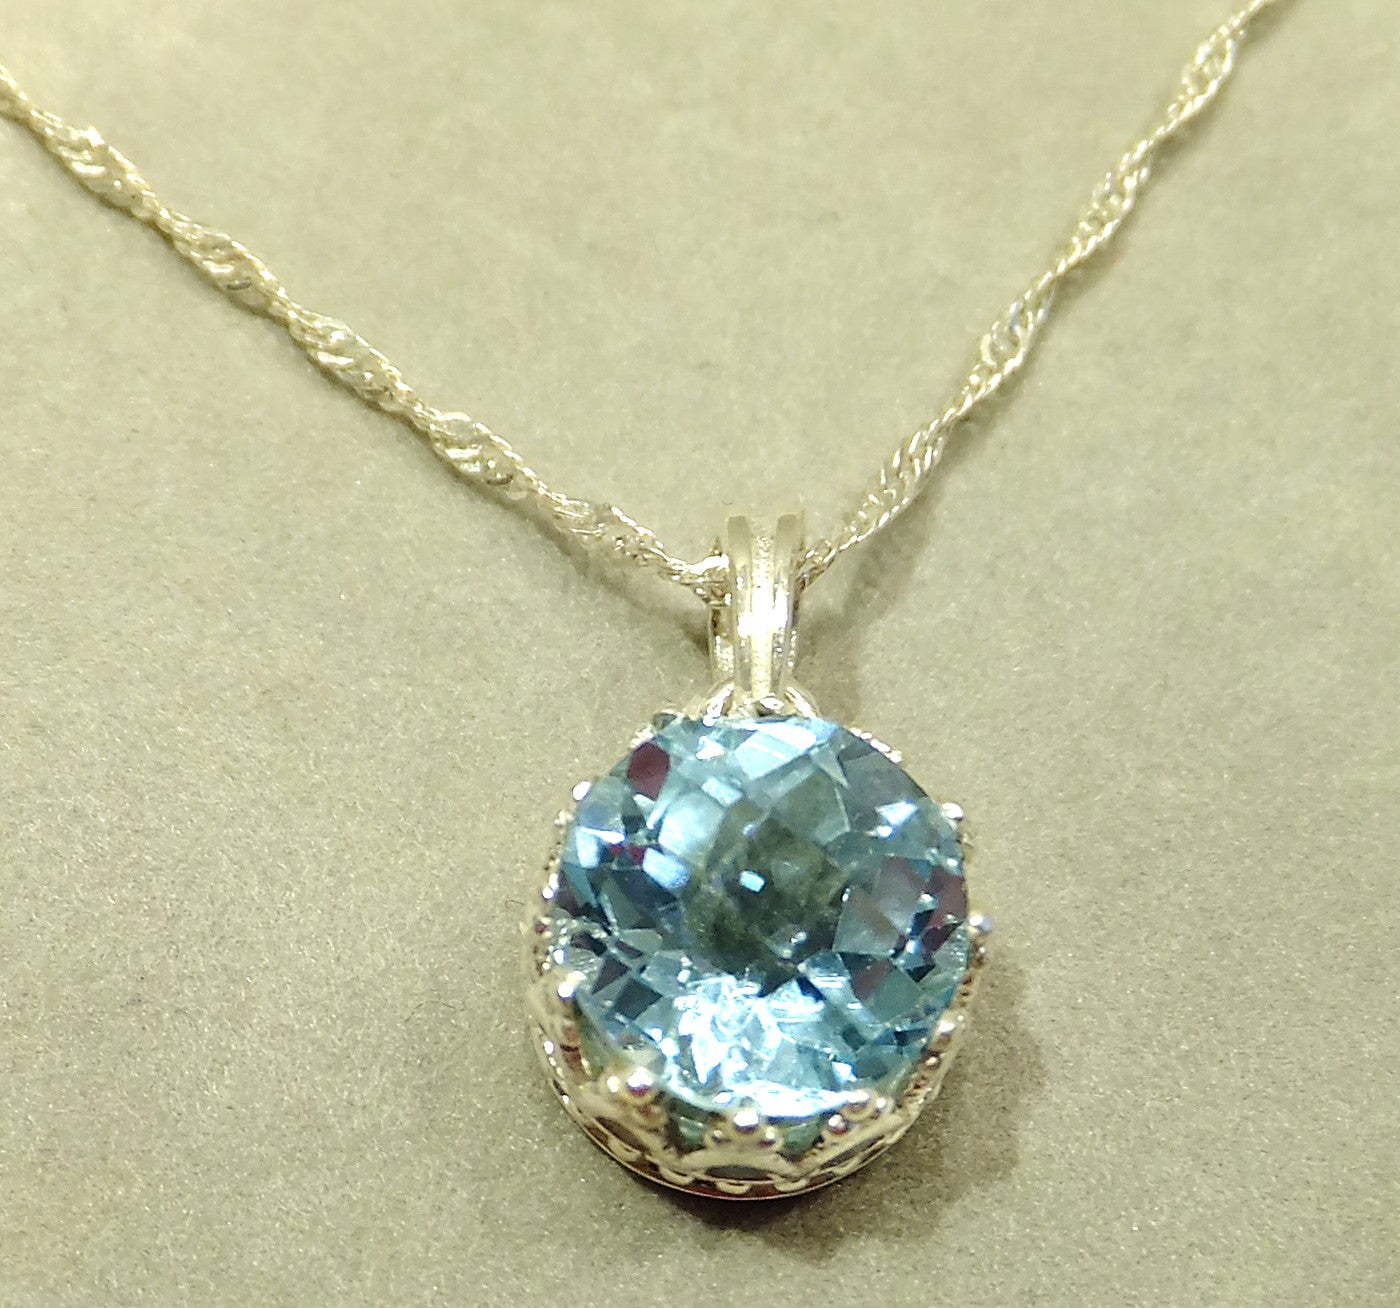 Blue topaz gemstone necklace